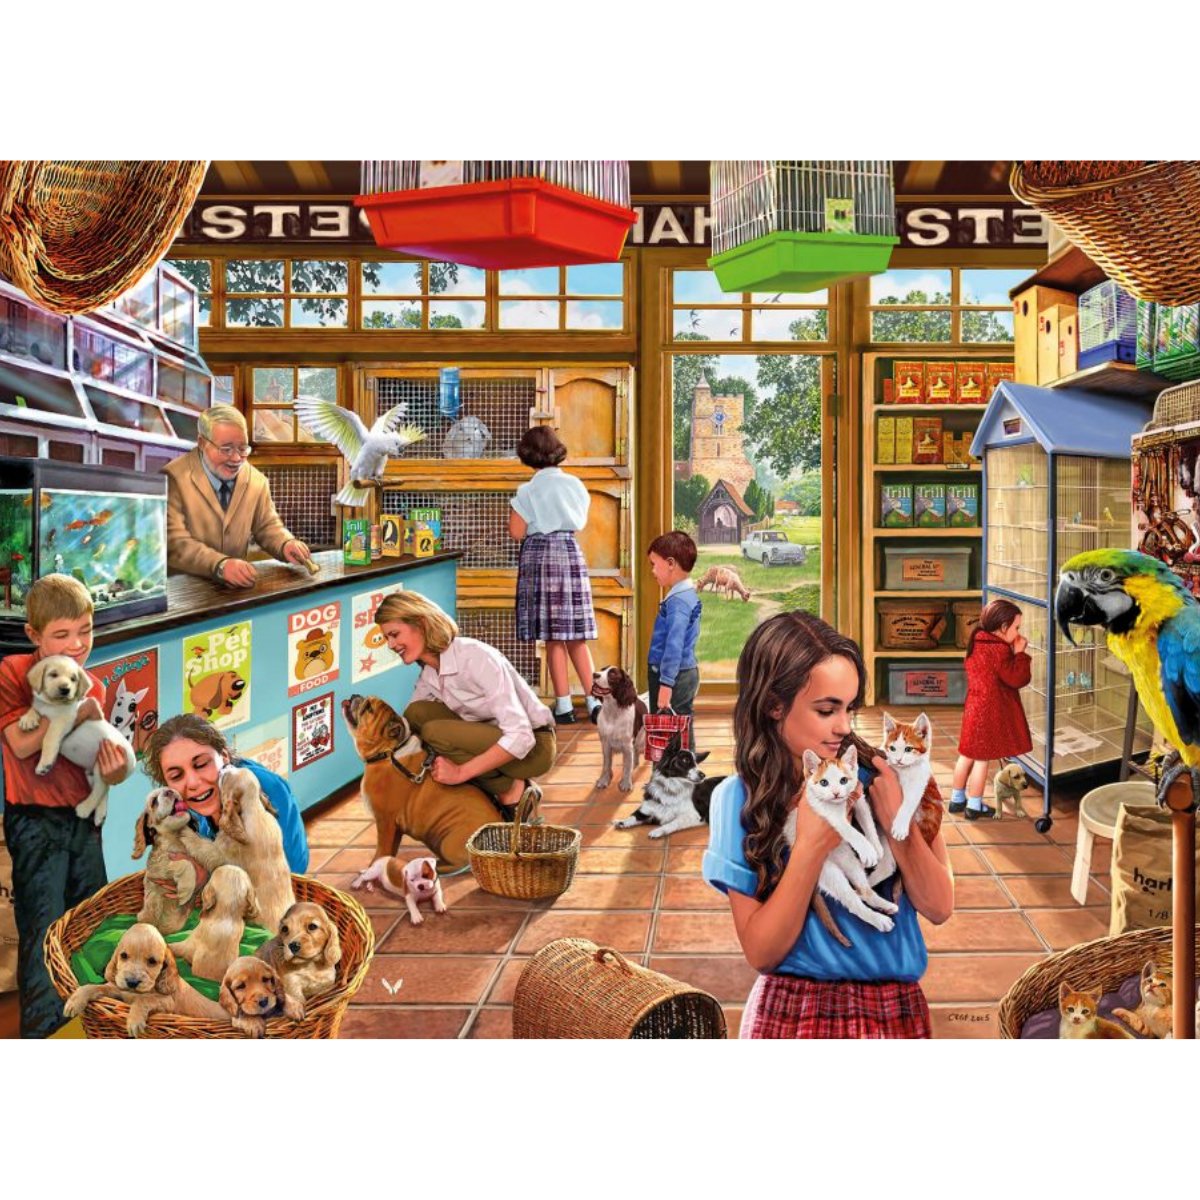 Ye Olde Pet Shoppe Jigsaw Puzzle (1000 Pieces) - Phillips Hobbies